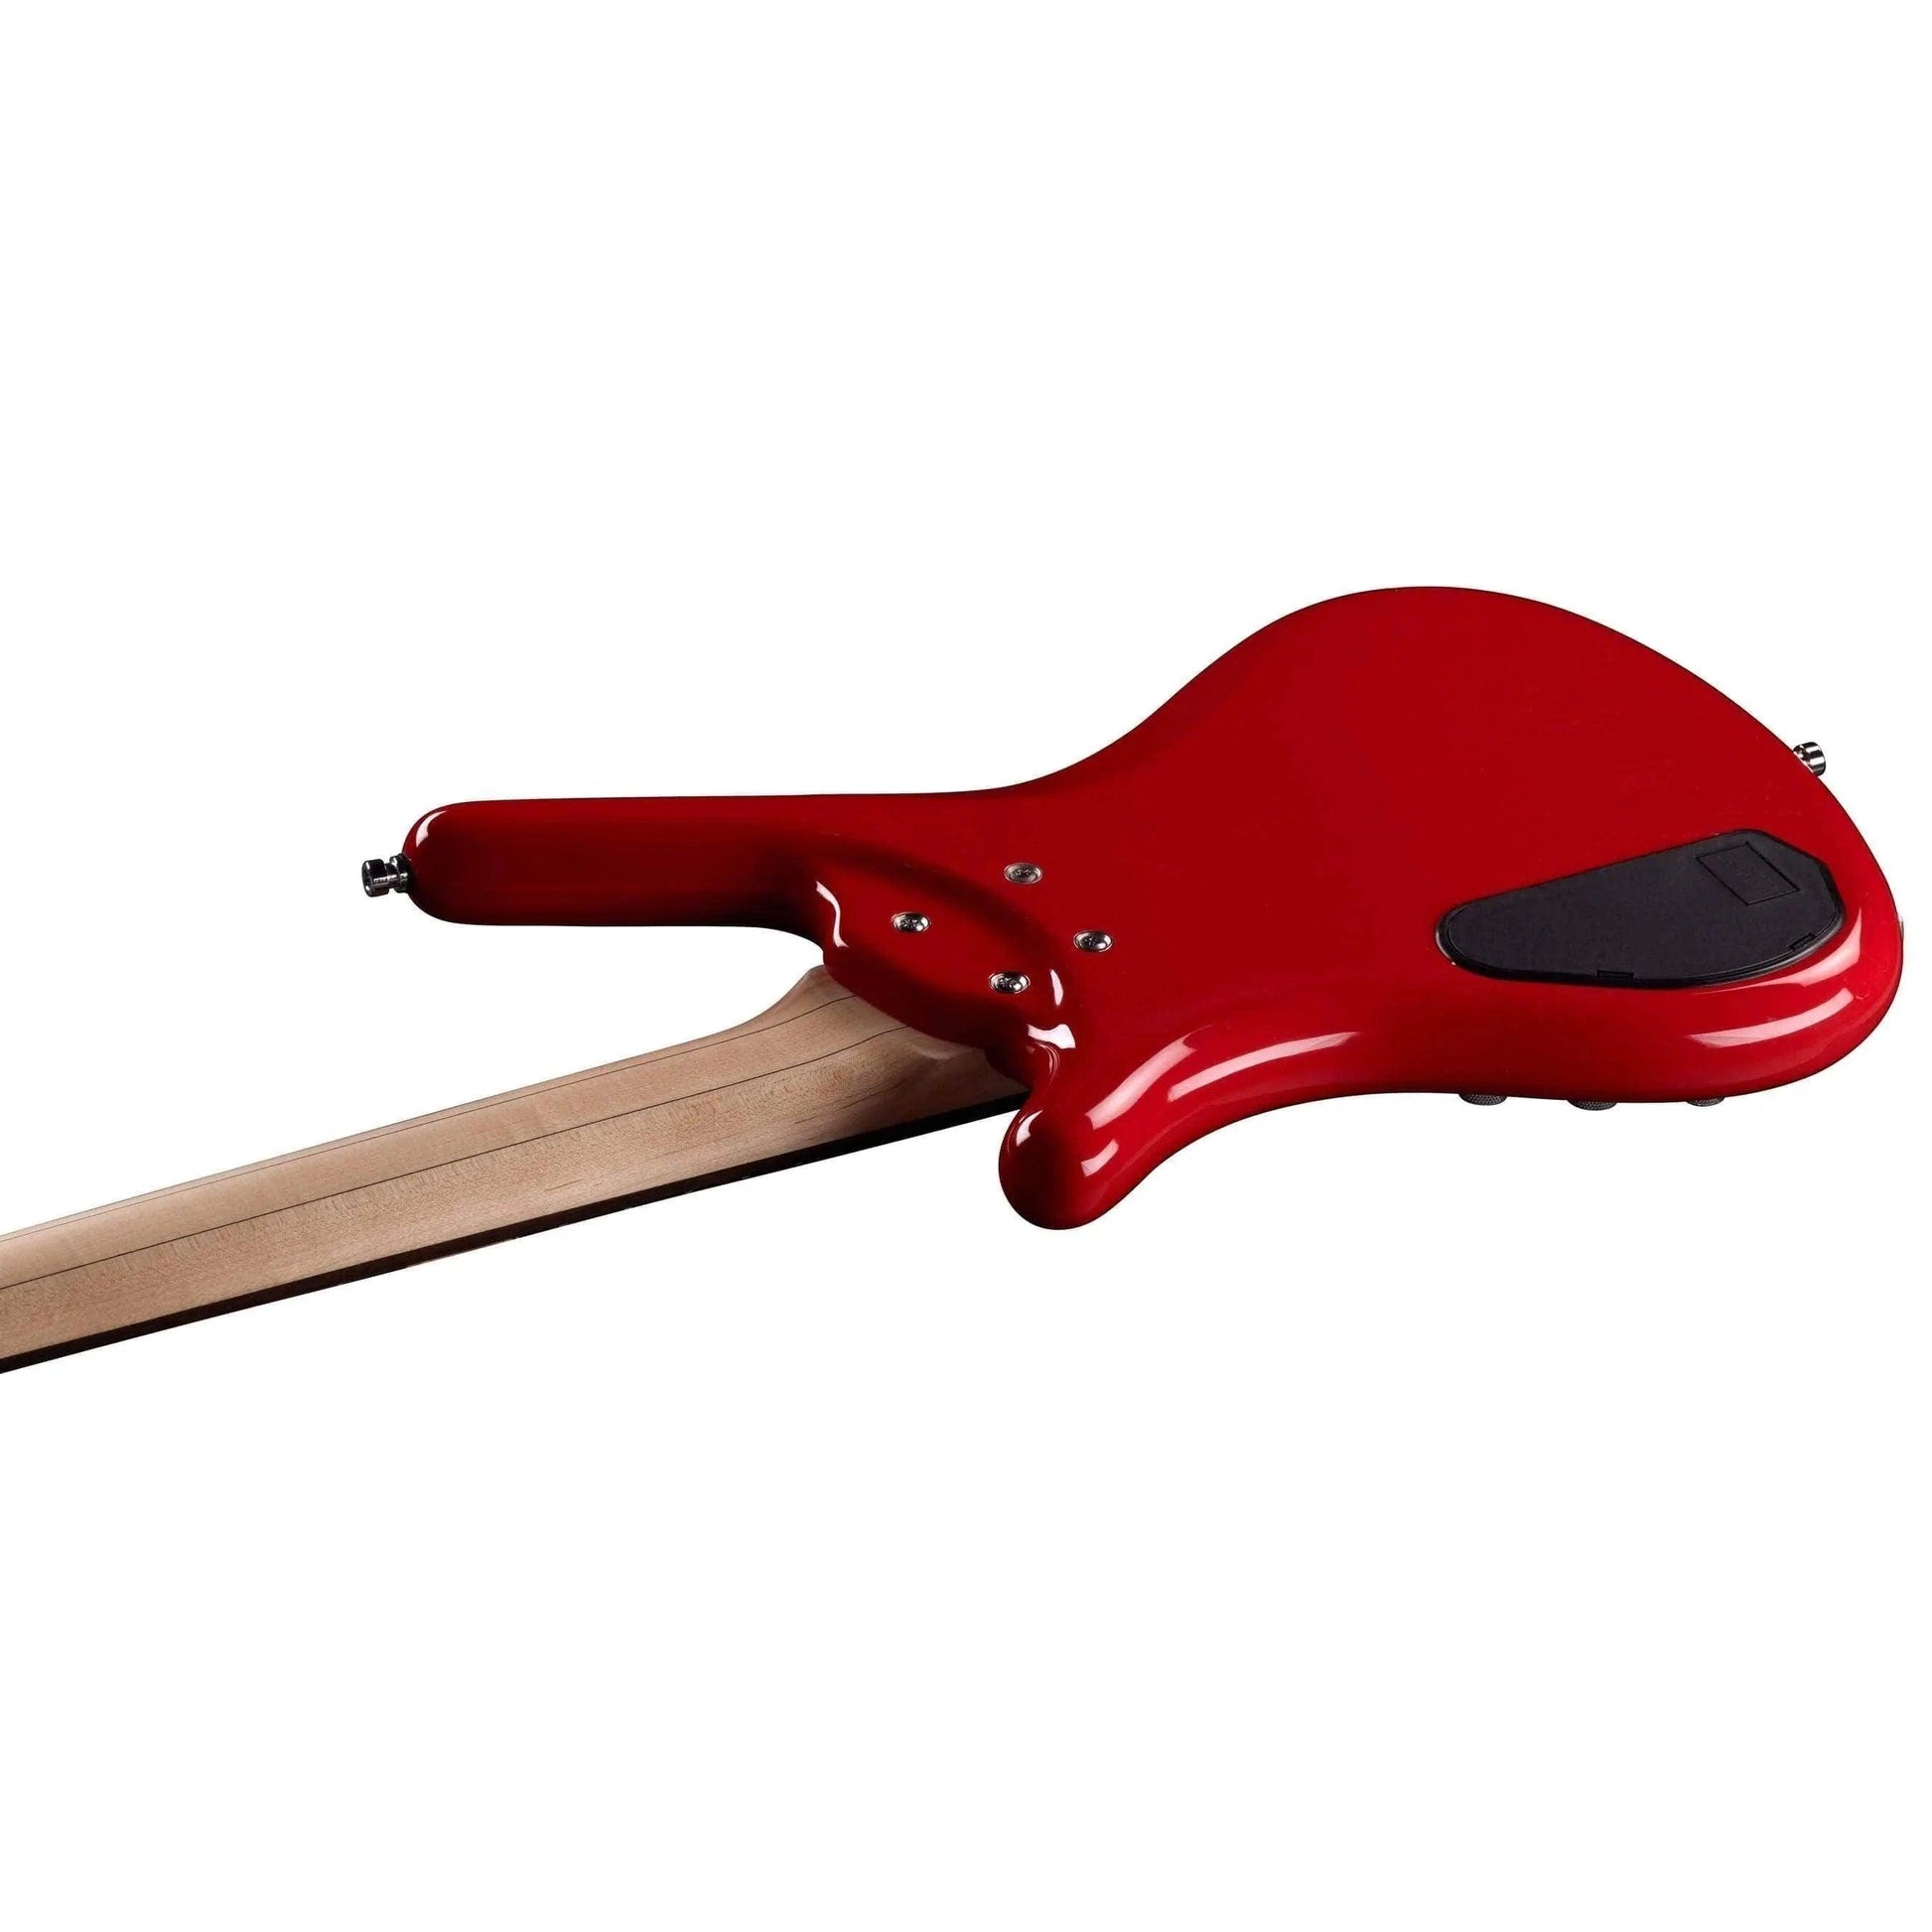 Warwick RB Streamer LX 5-string Electric Bass - Metallic Red